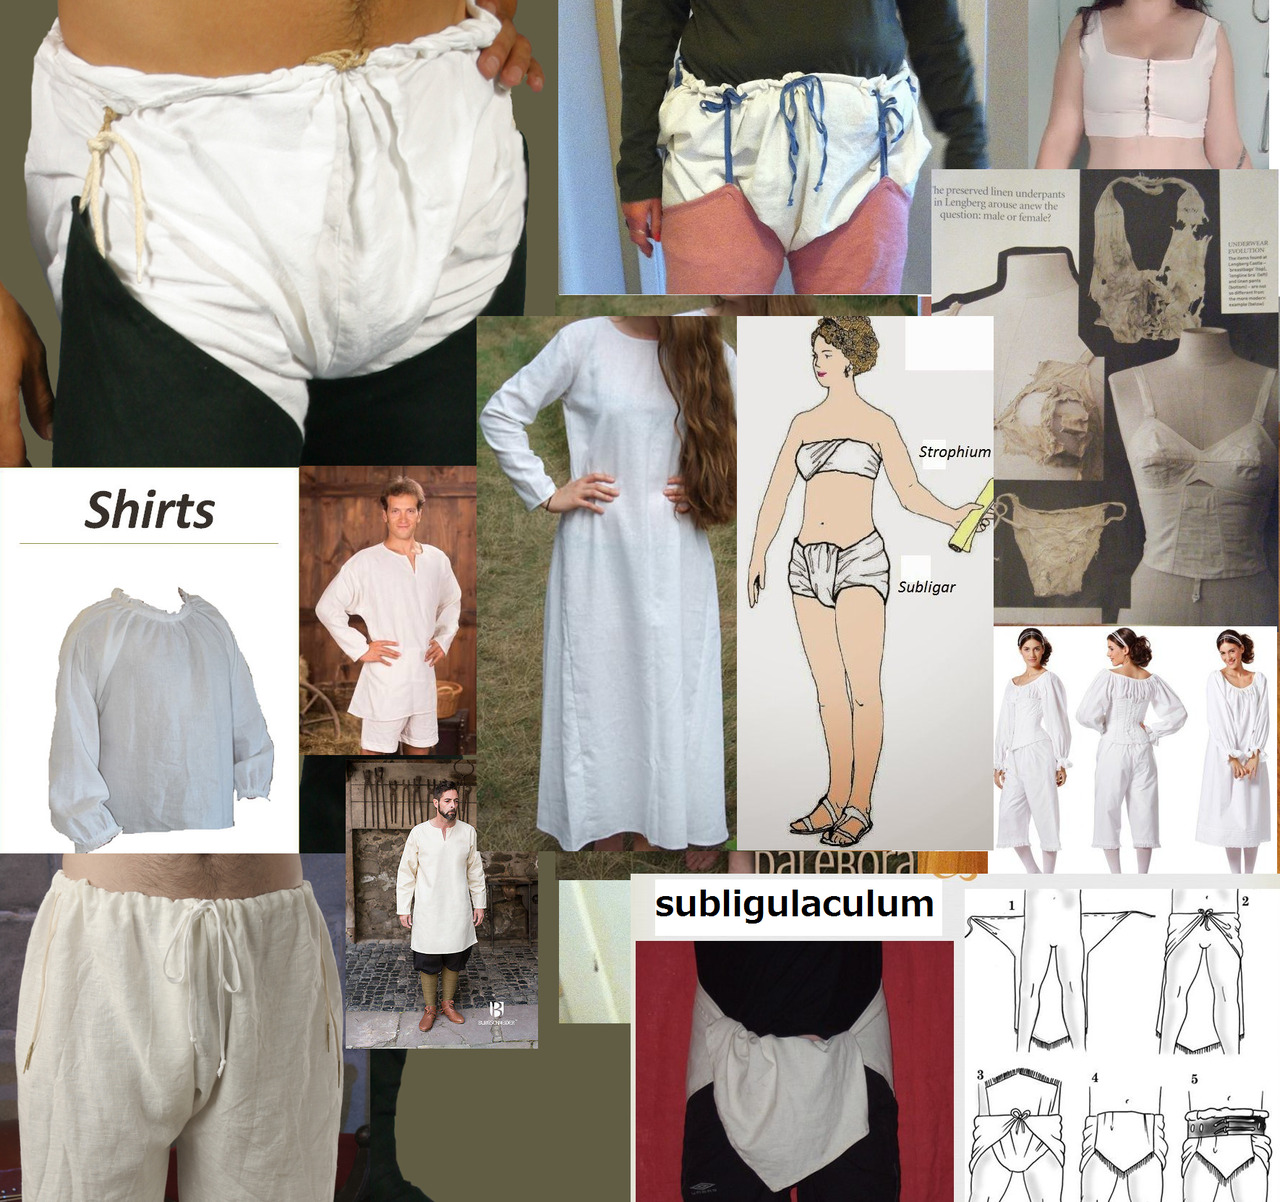 Realistic Roman or medieval underwear - Mod Ideas - Nexus Mods Forums